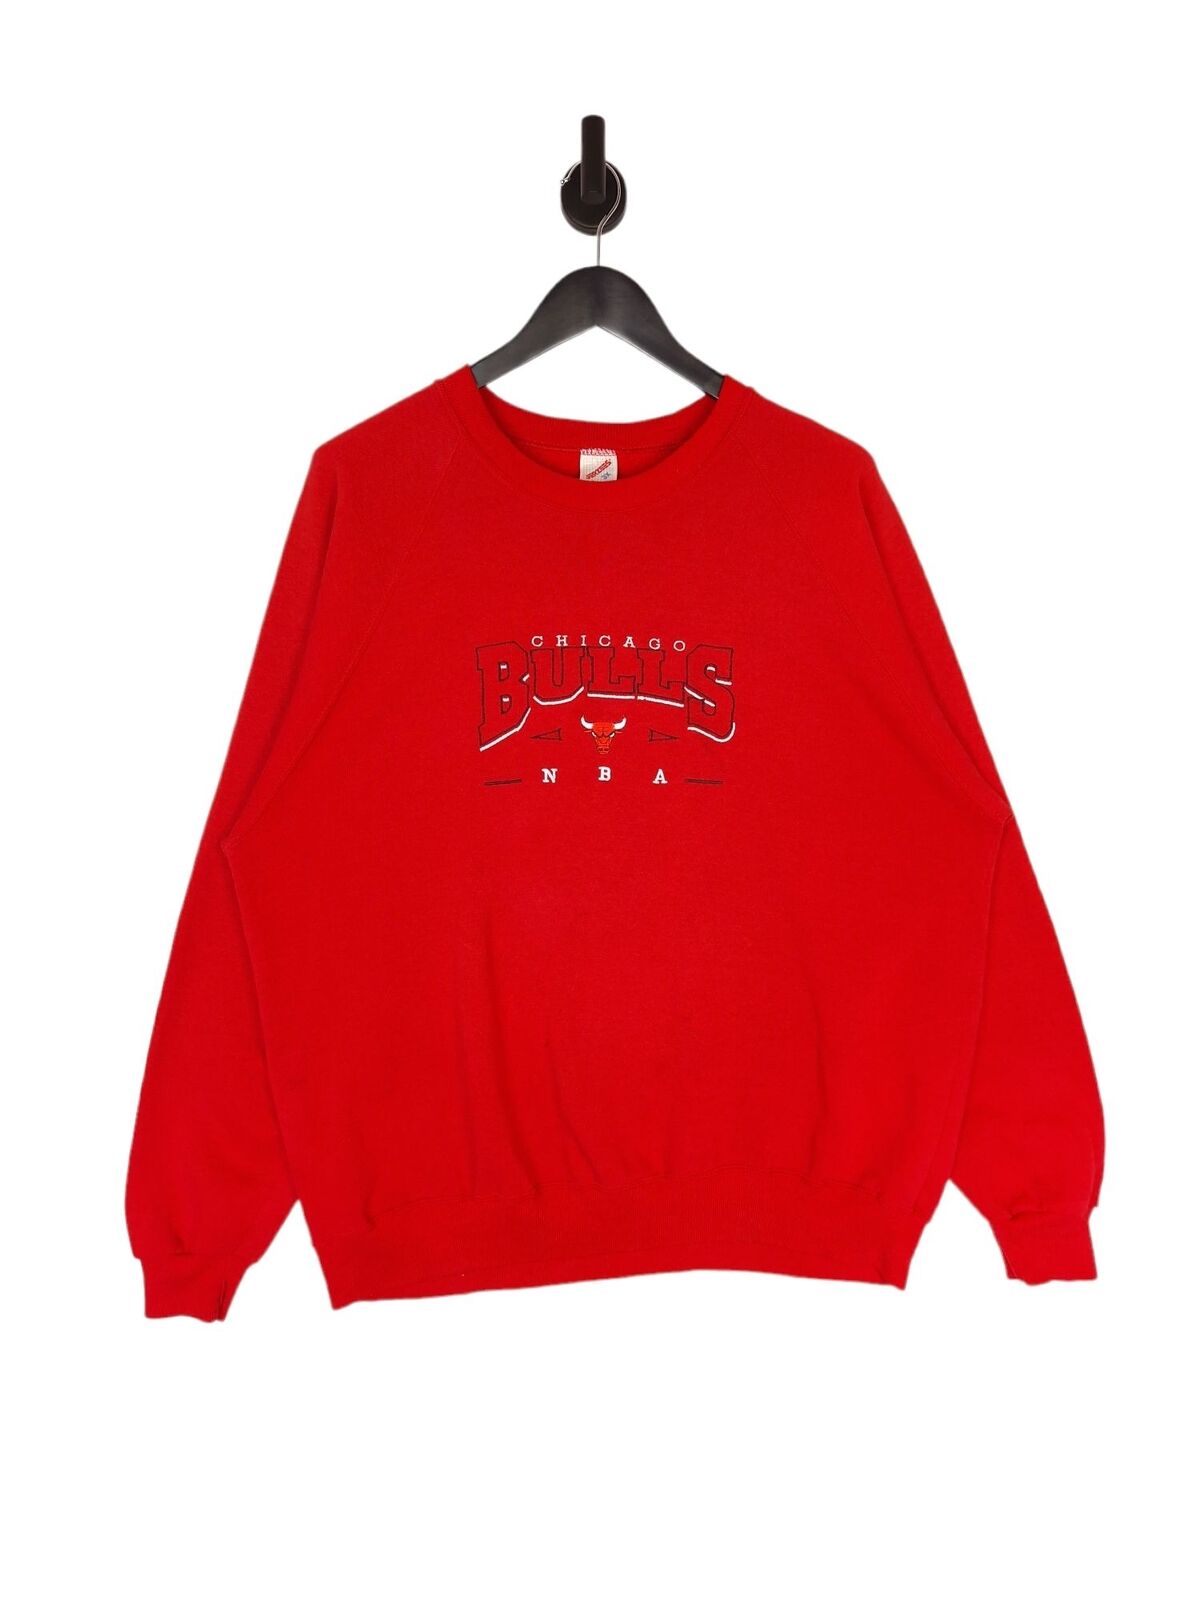 Made in USA Jerzees NBA Chicago Bulls Sweatshirt - Size 3XL